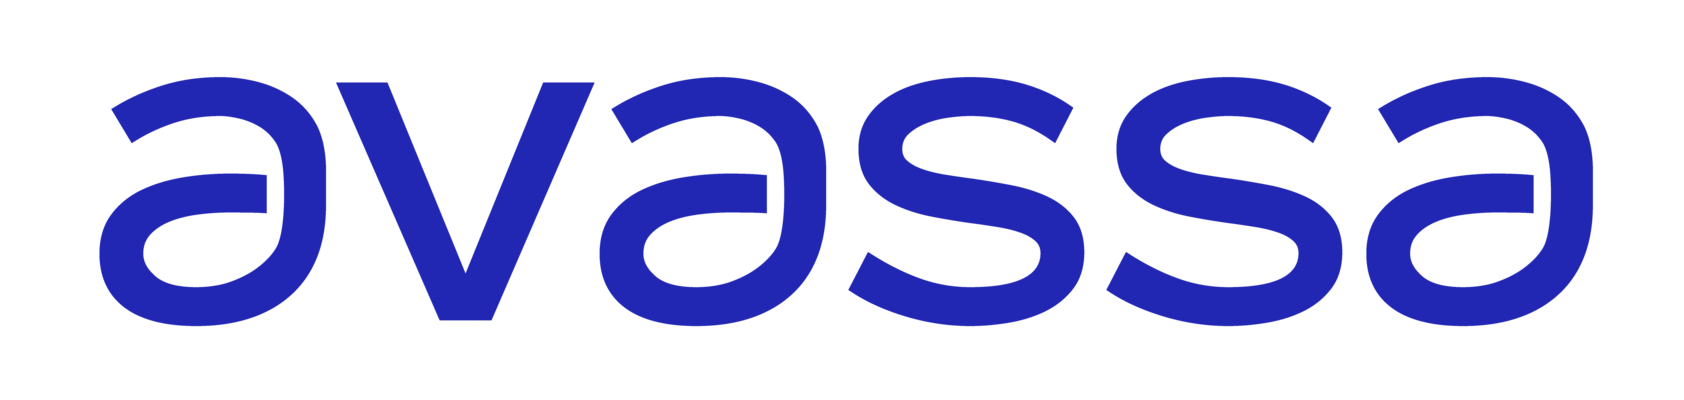 Profile image for Avassa System AB